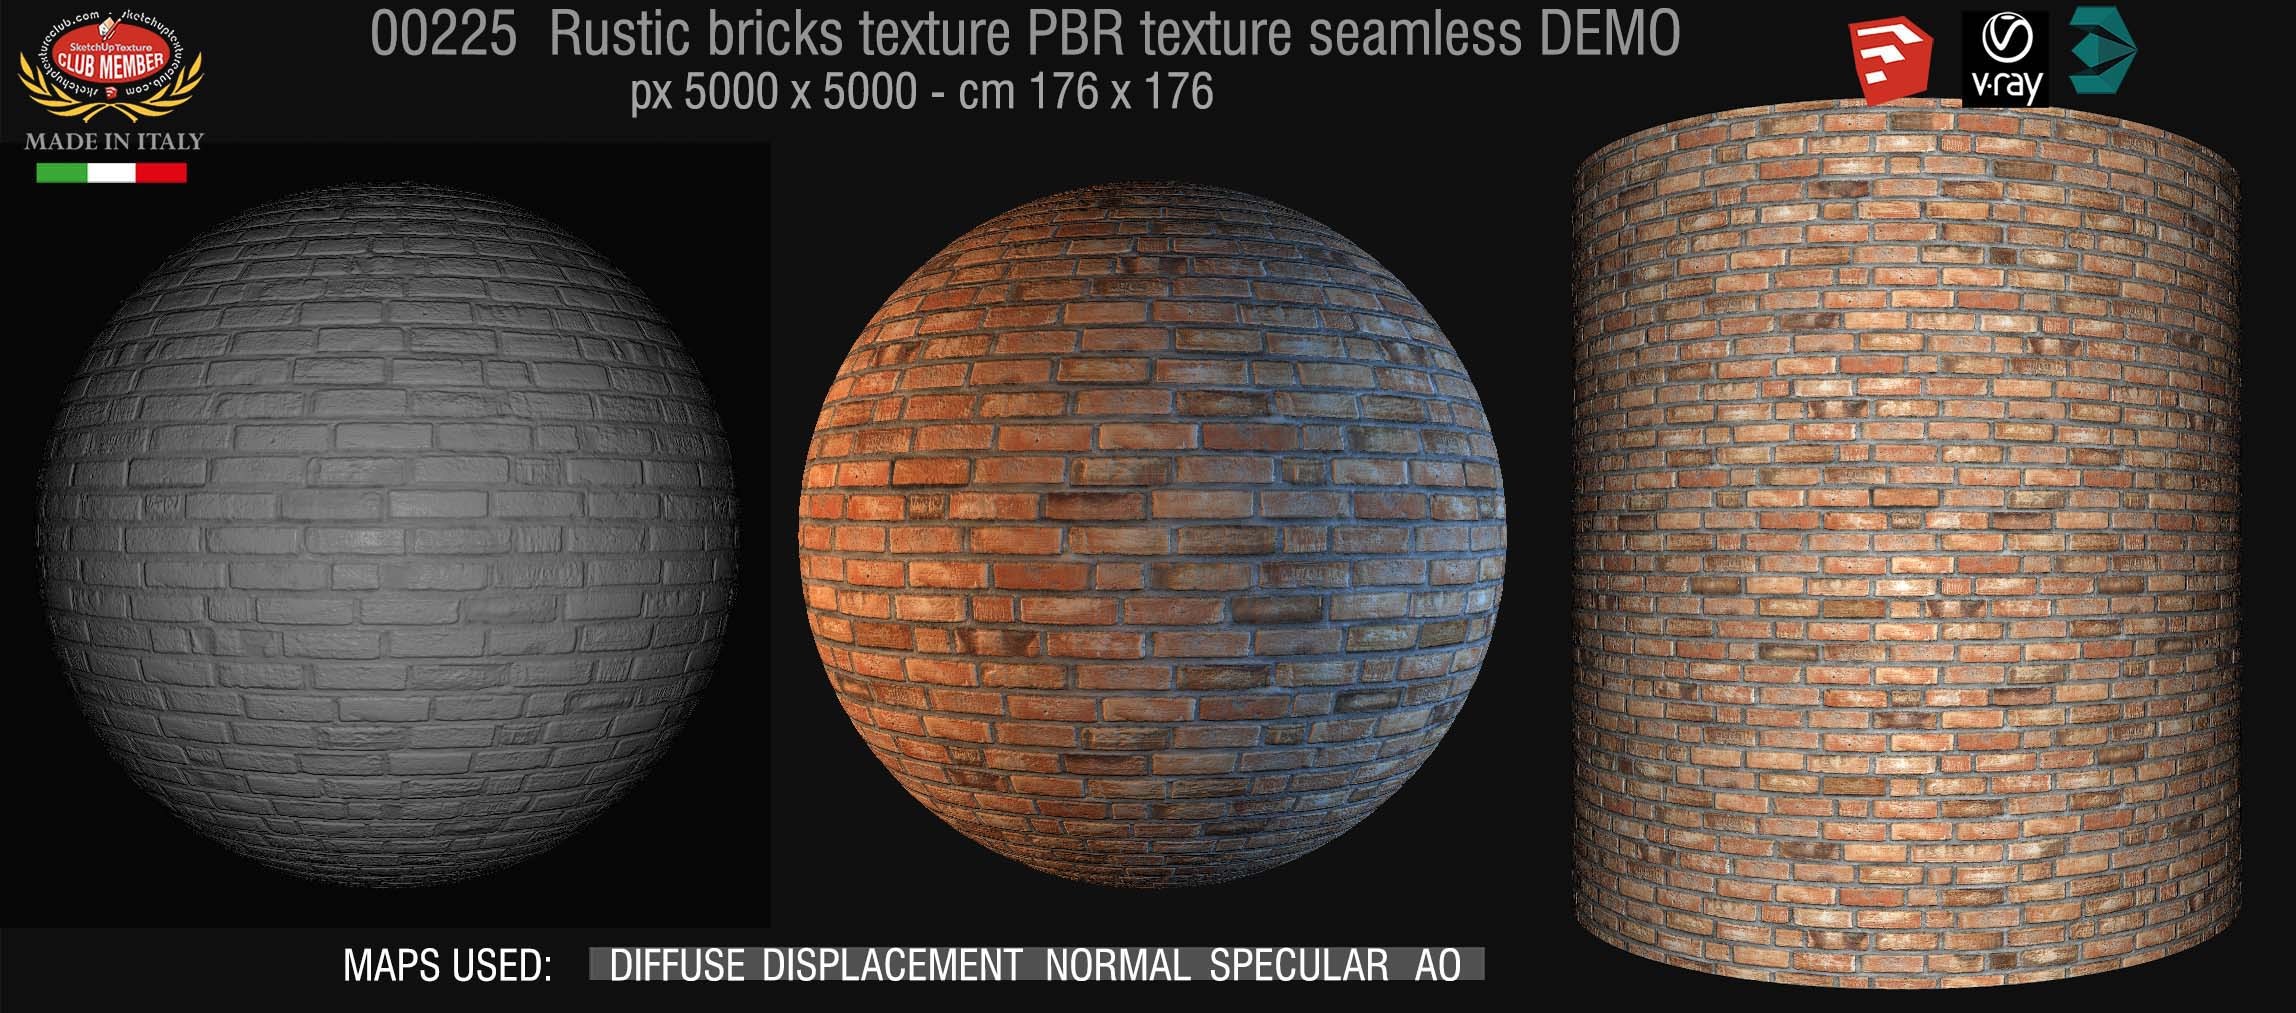 00225 Rustic bricks PBR texture seamless DEMO